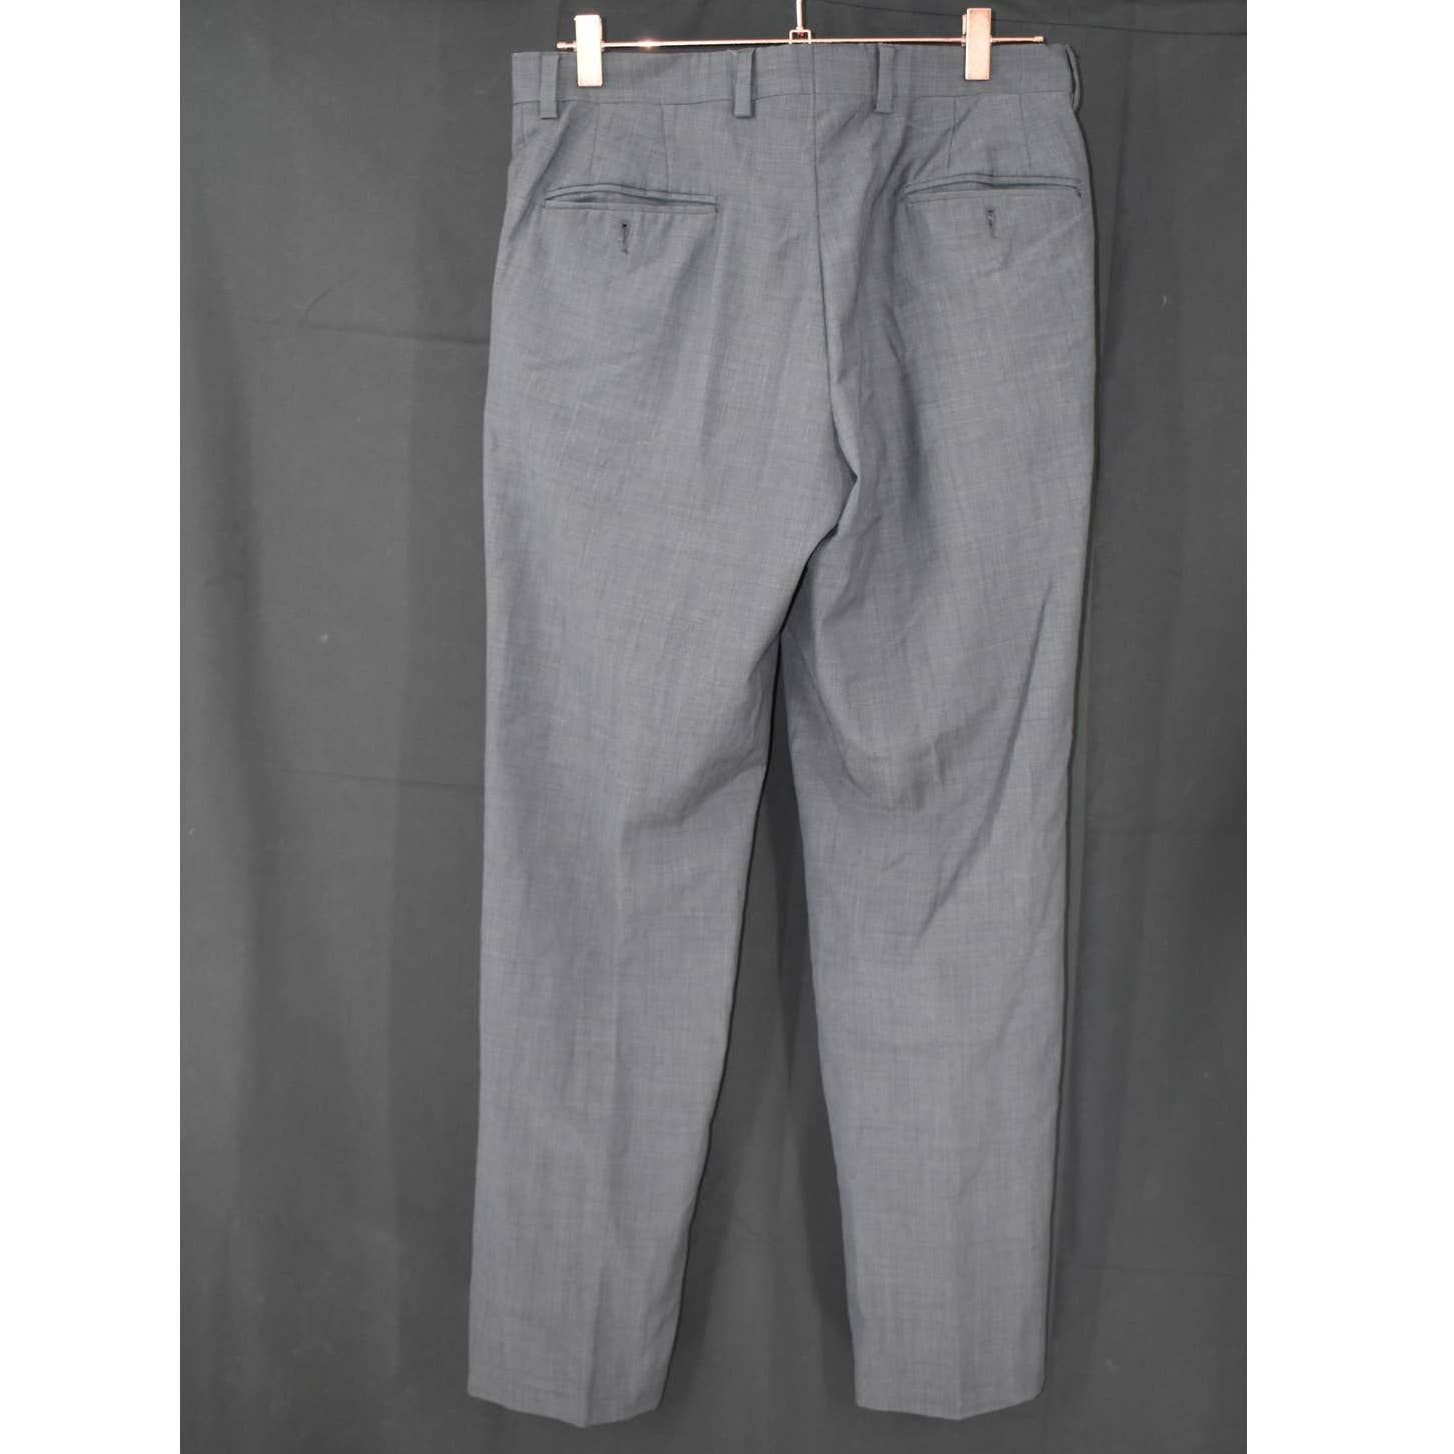 Ted Baker Grey Jarrett Pant 100% Wool Dress Pants - 33